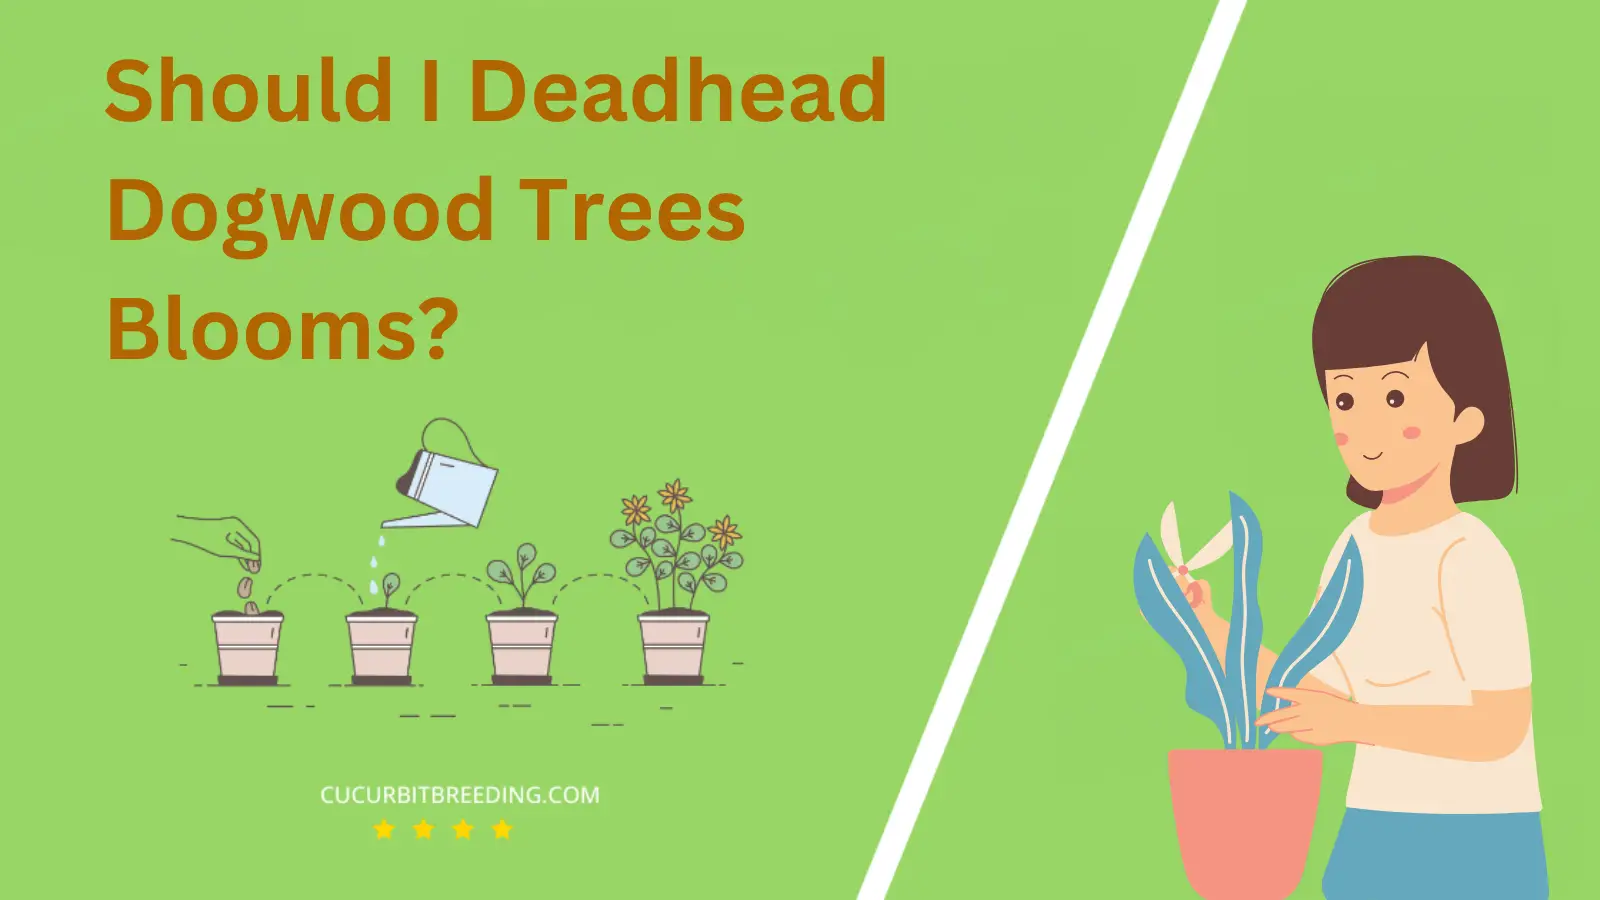 Should I Deadhead Dogwood Trees Blooms?